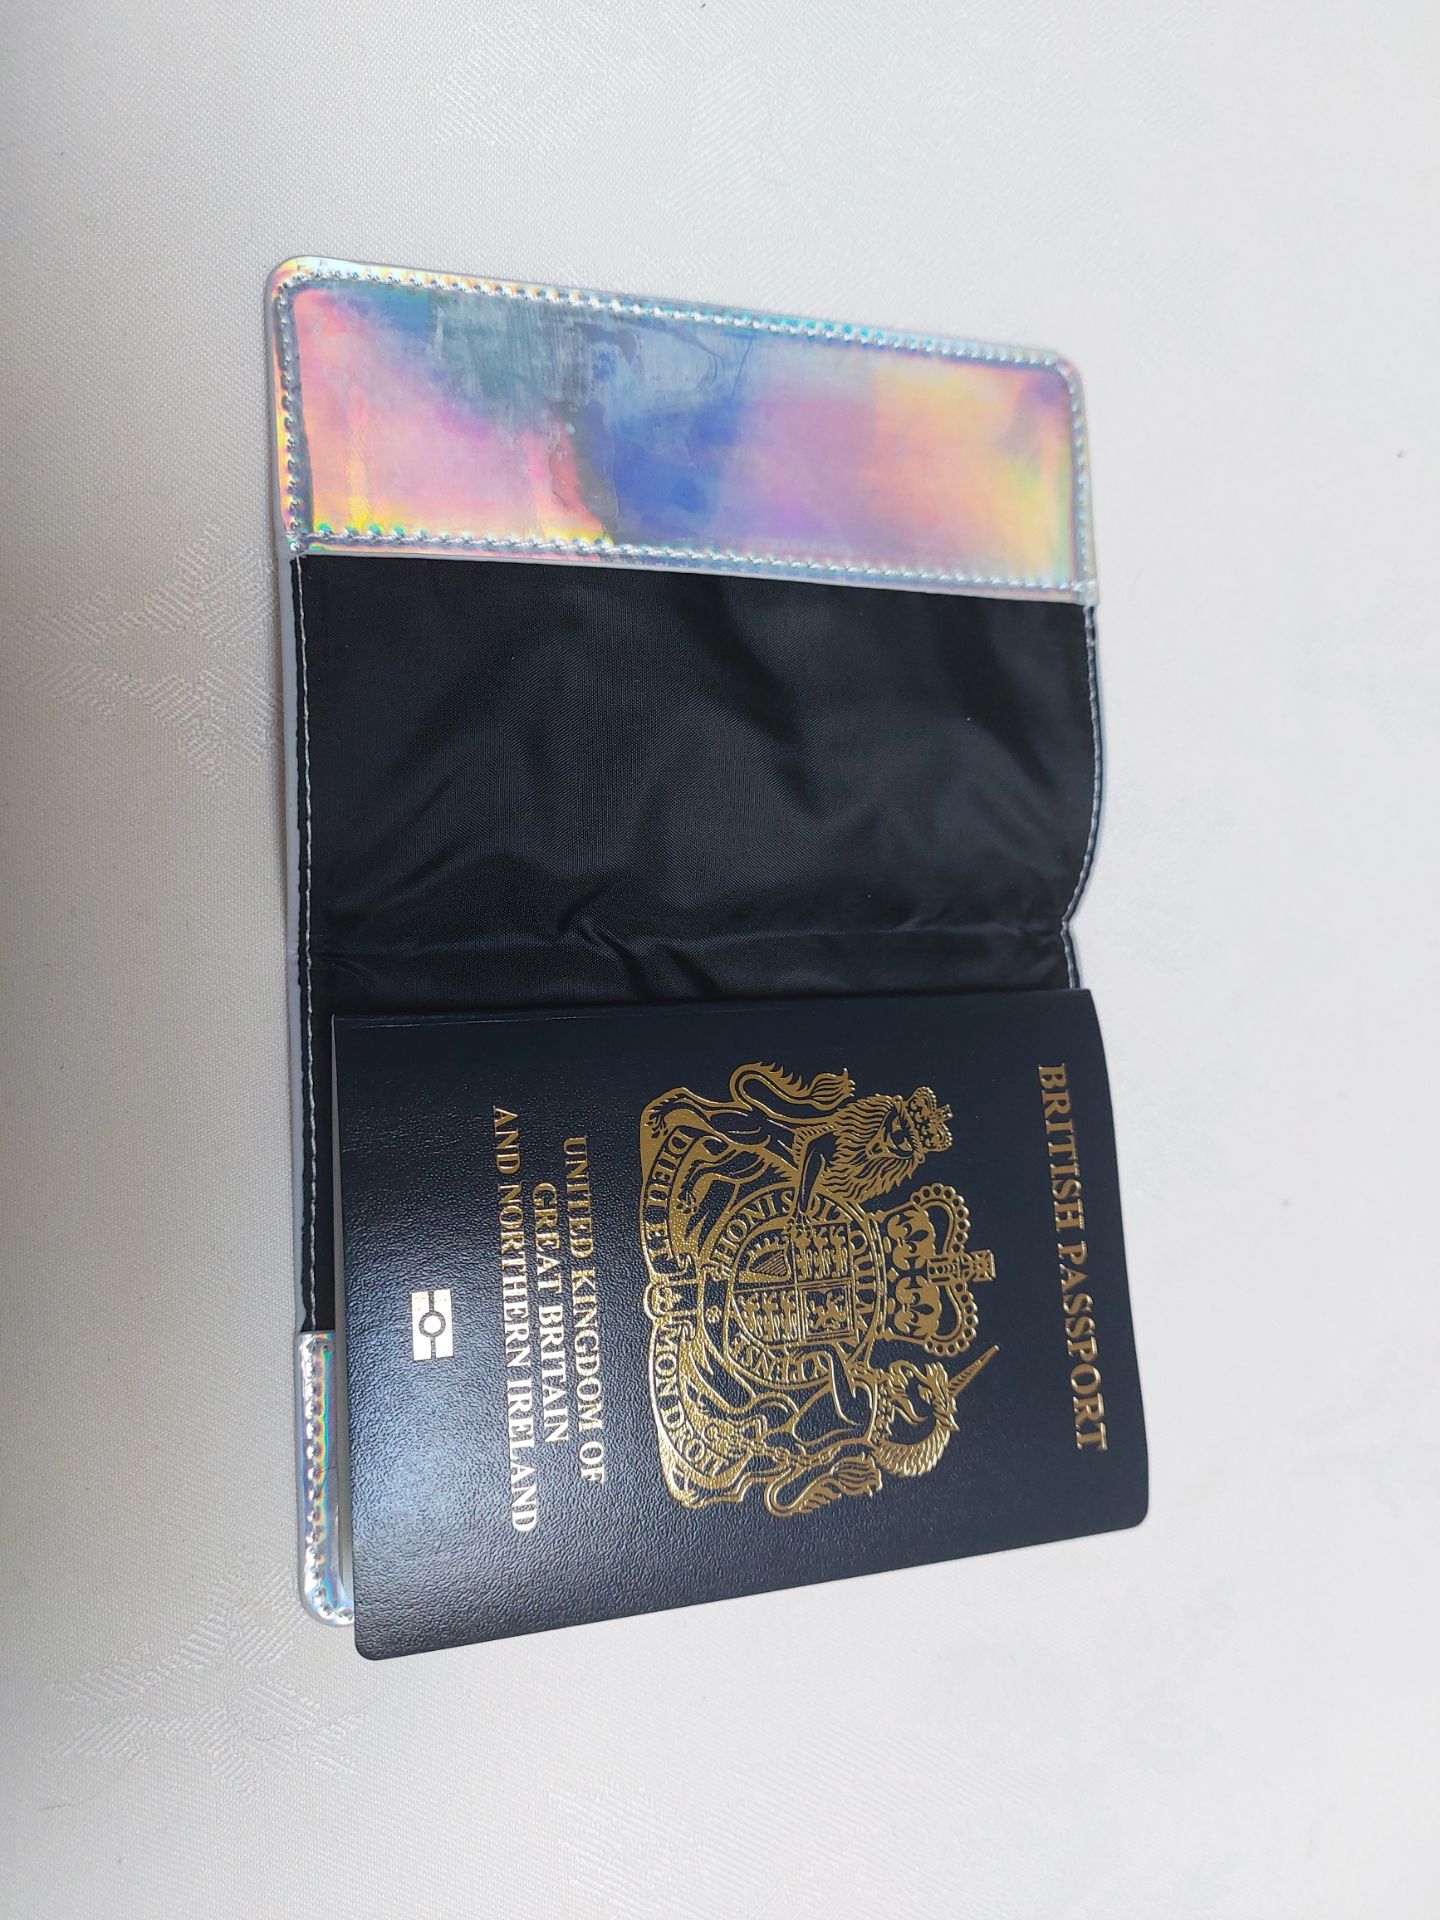 Irridescent Passport Covers x 2 - Image 3 of 3